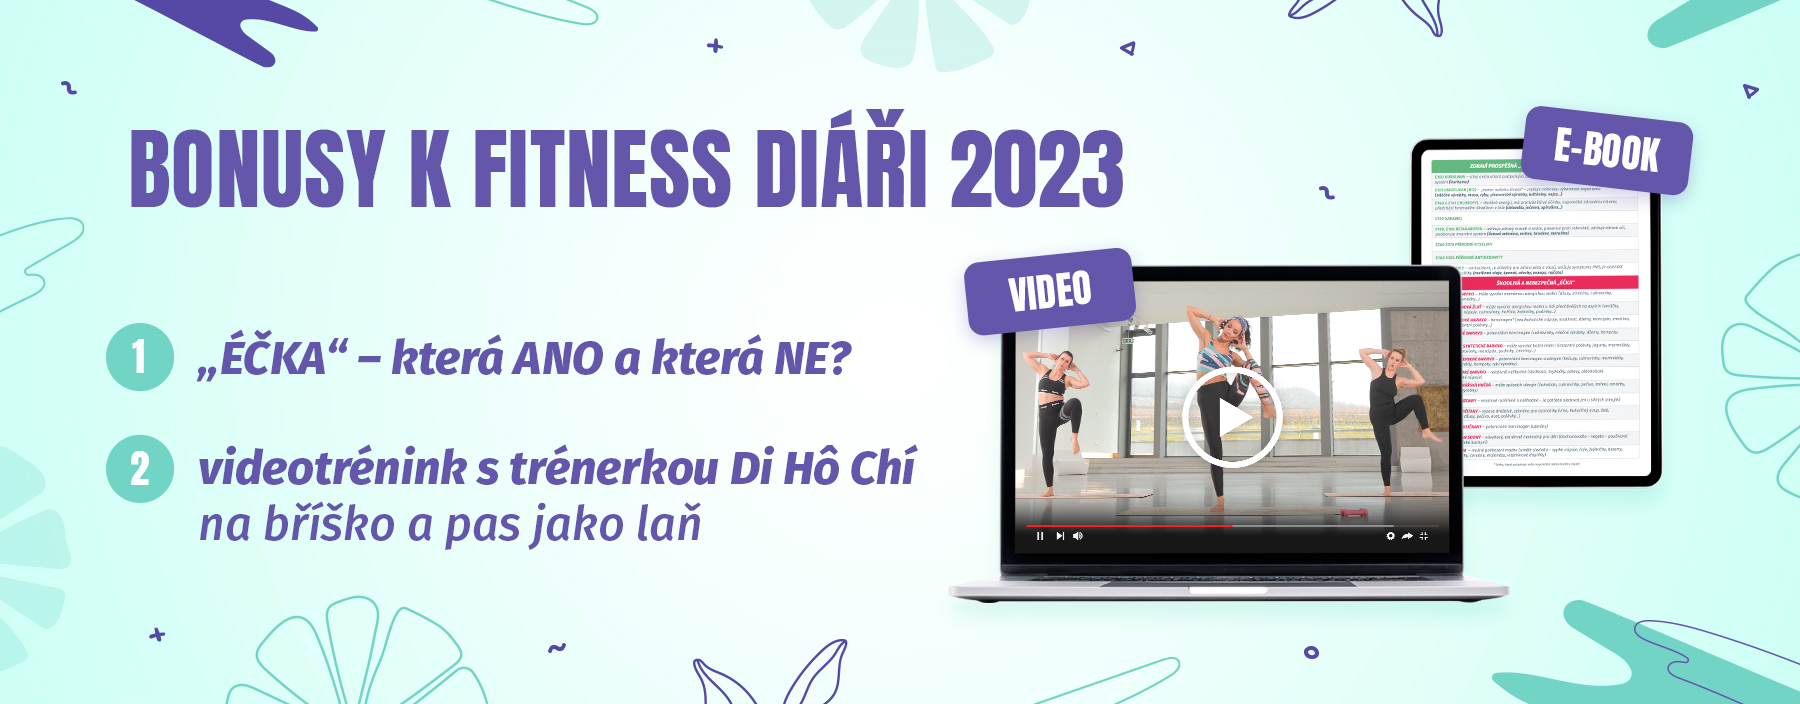 fitness diar 2023 cesky bonusy